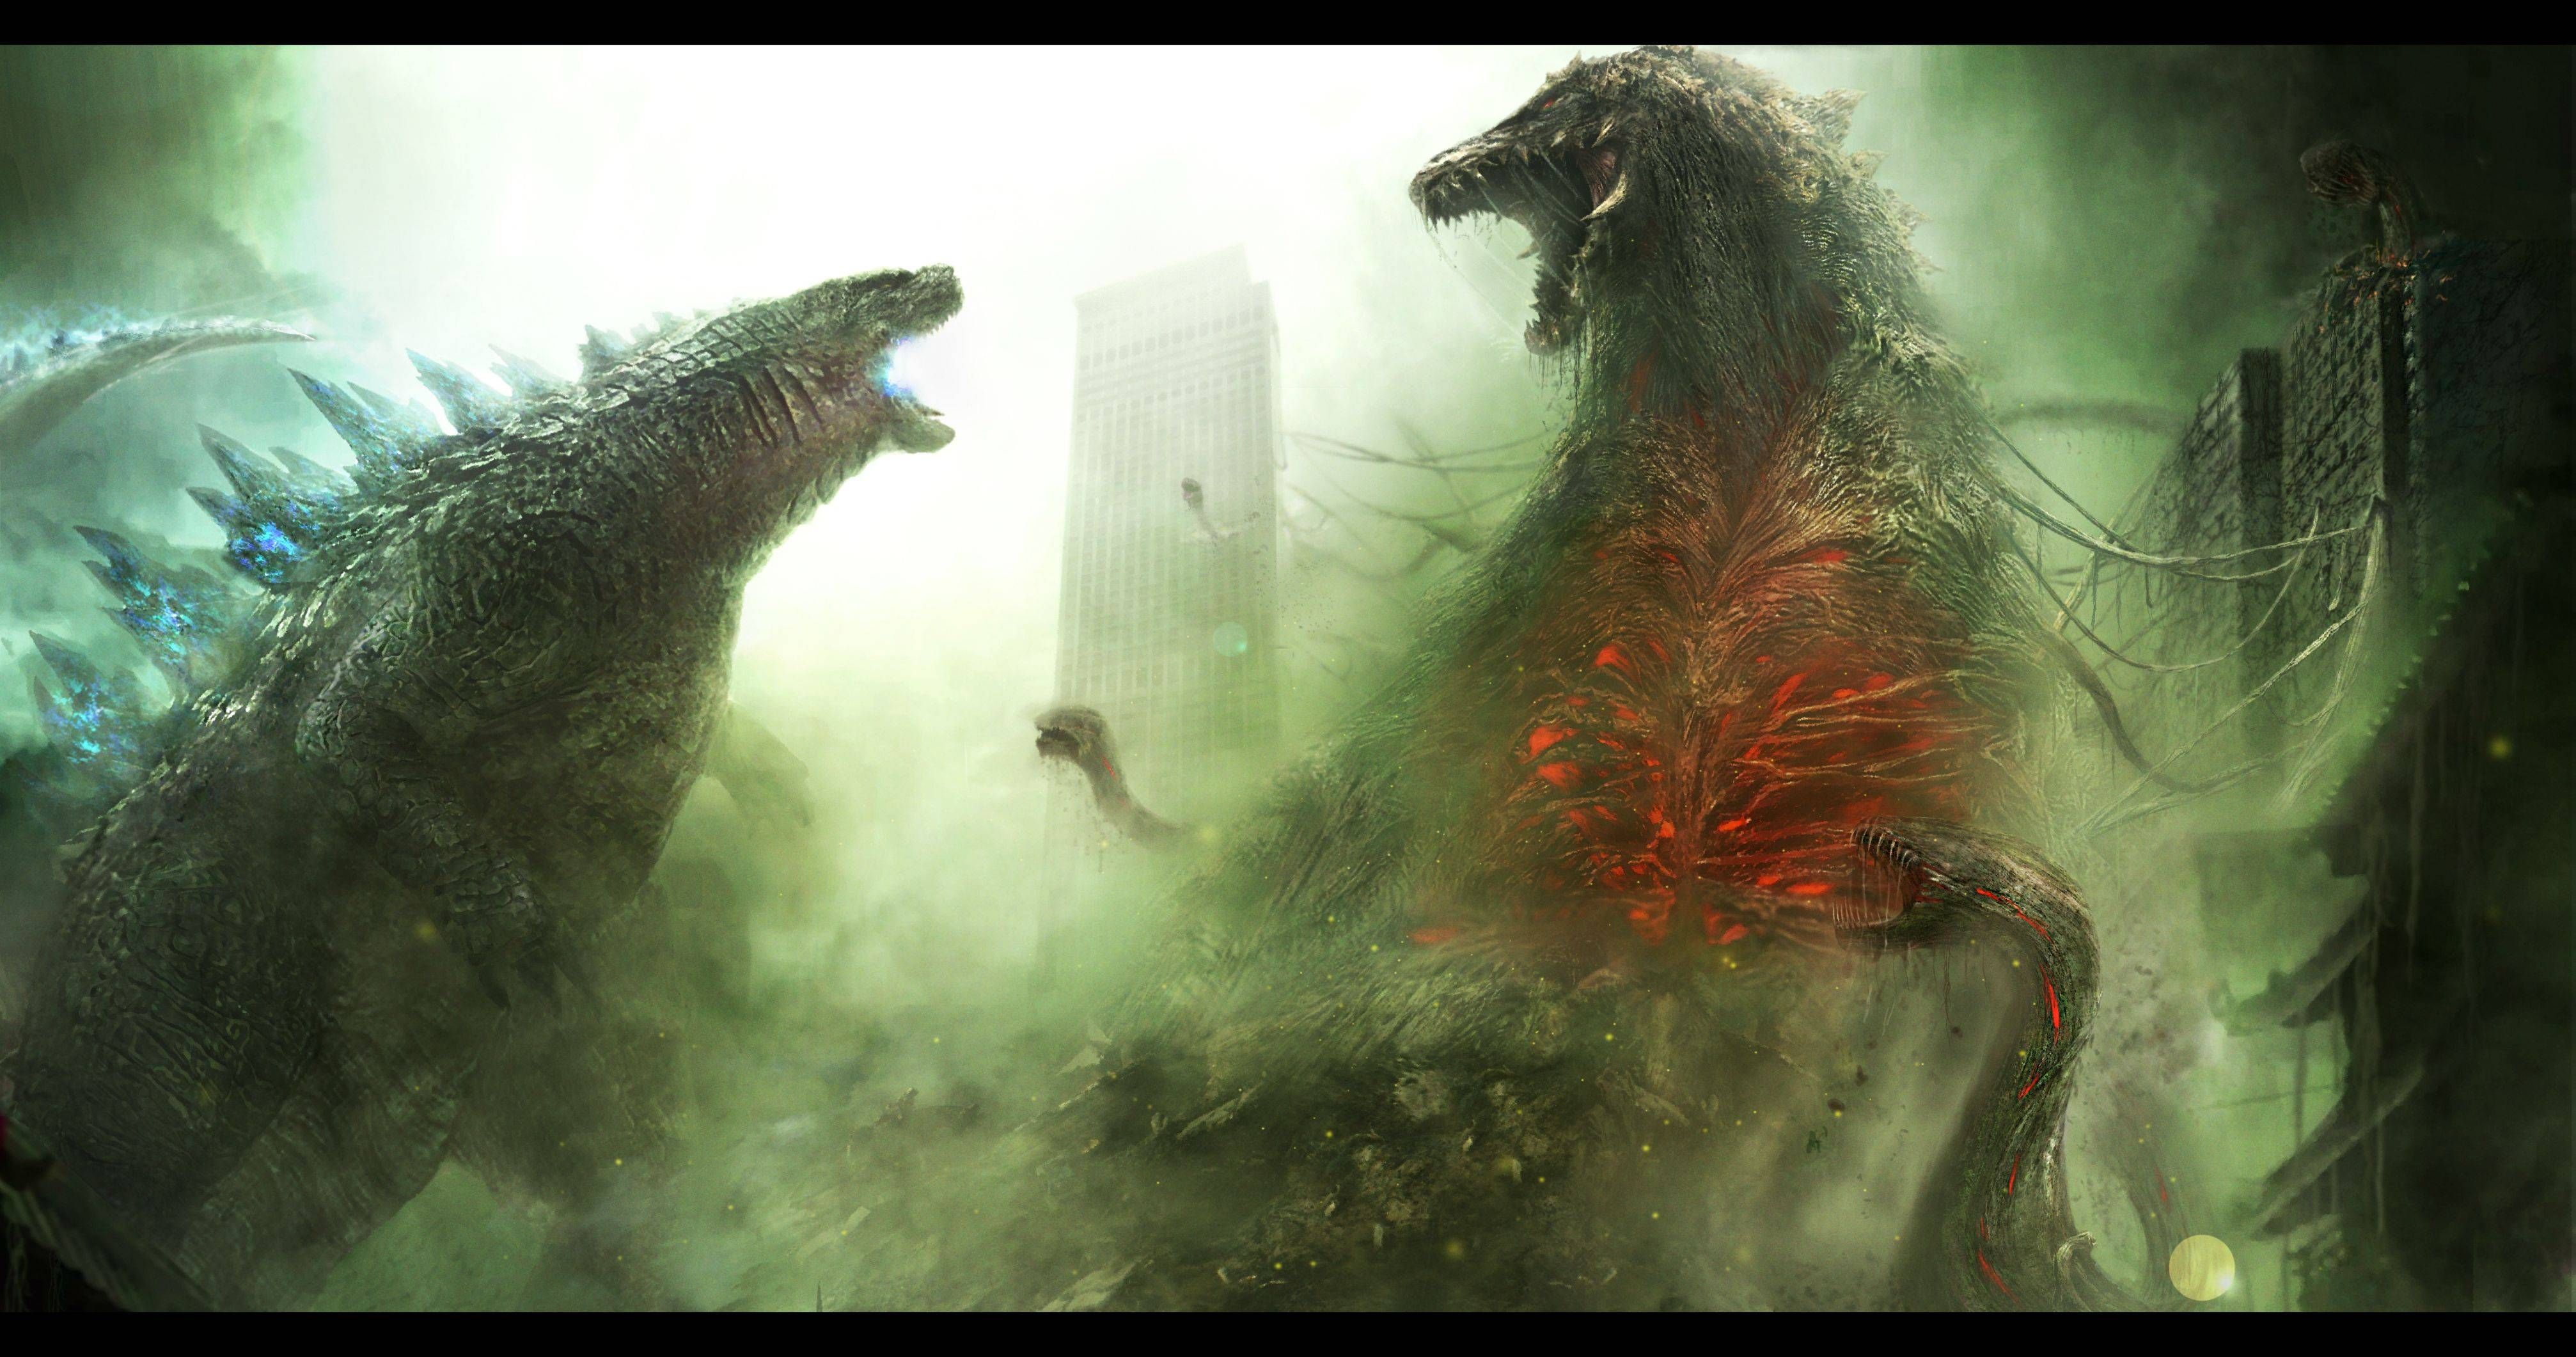 Legendary biollante. Godzilla wallpaper, Godzilla vs, Godzilla 2014